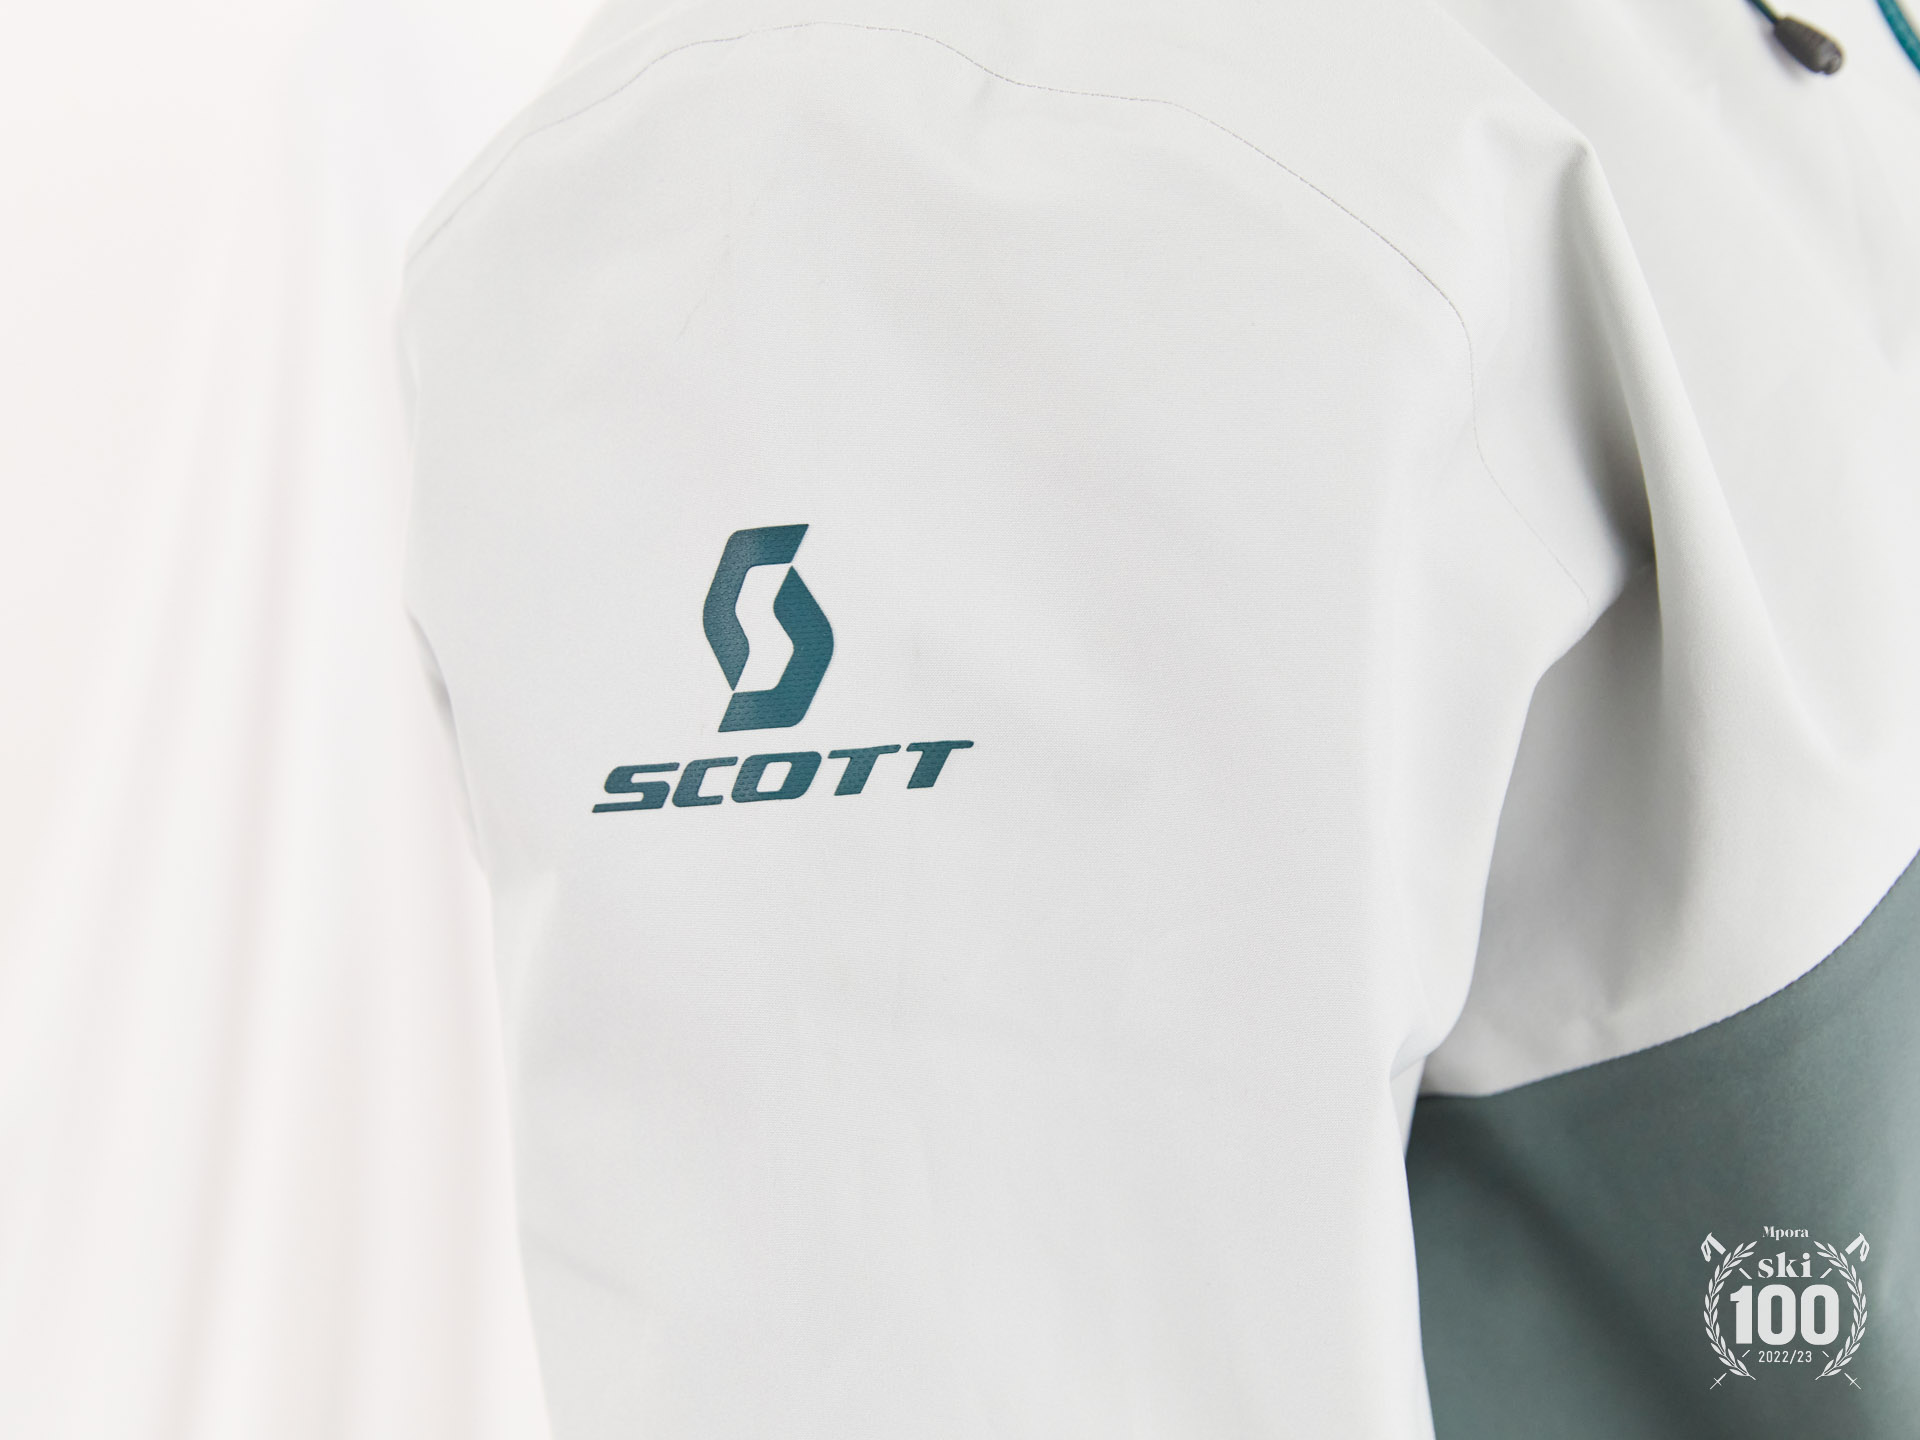 Scott Vertic 3L Jacket And Pants | Review